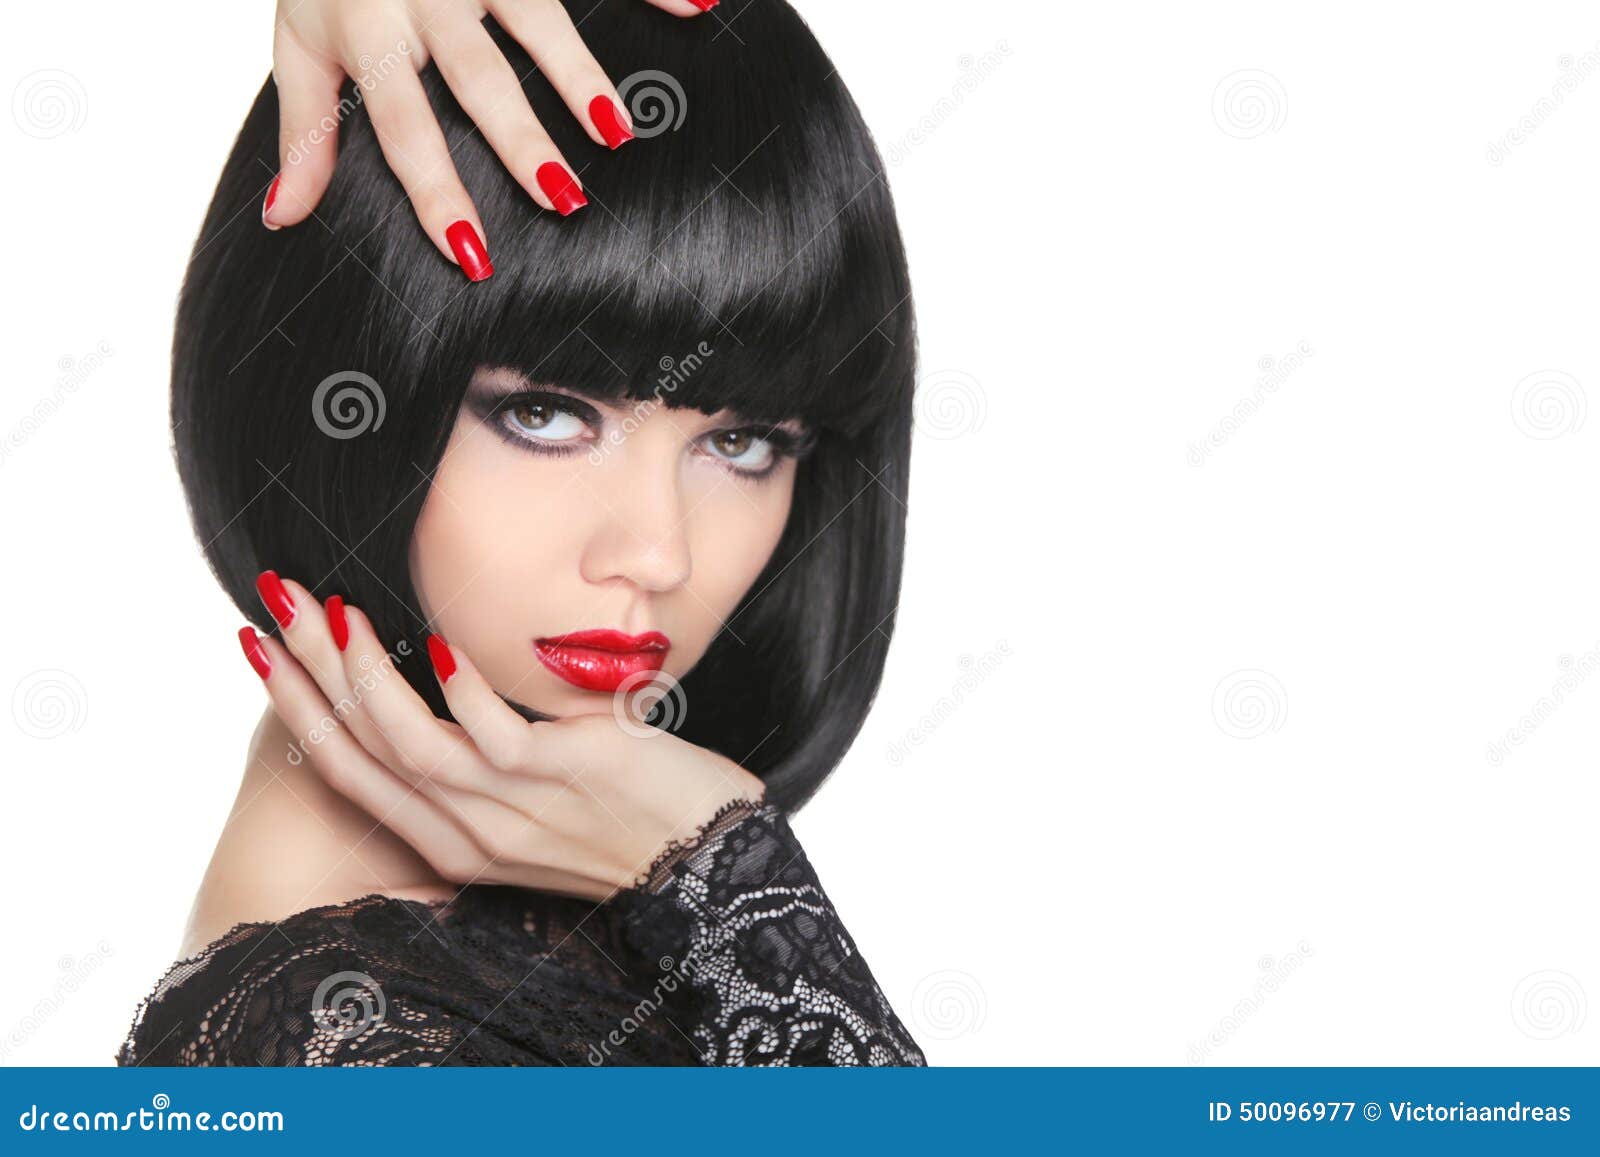 manicured nails. beauty girl portrait. red lips. back short bob